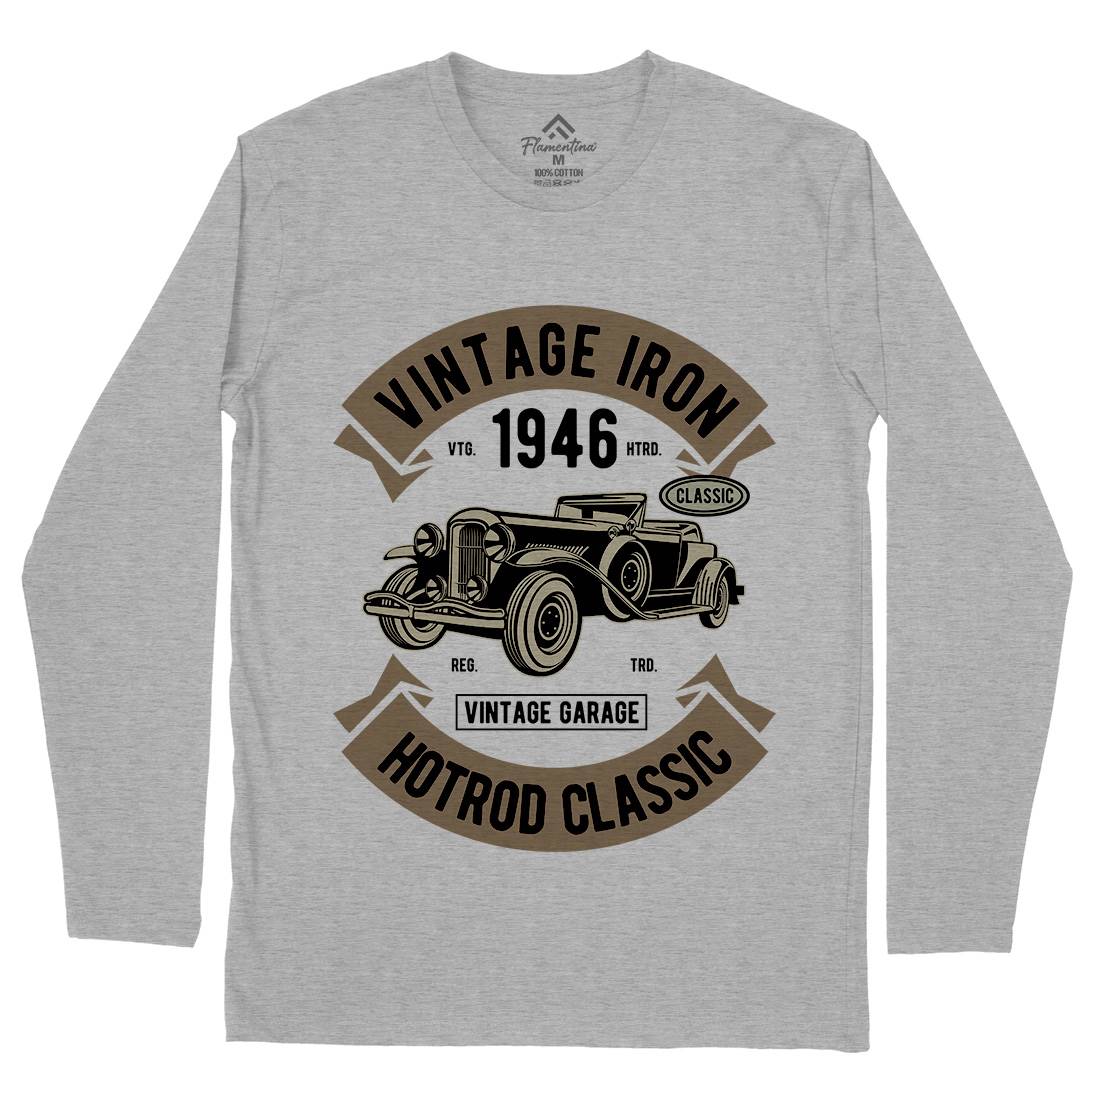 Vintage Iron Classic Mens Long Sleeve T-Shirt Cars D595